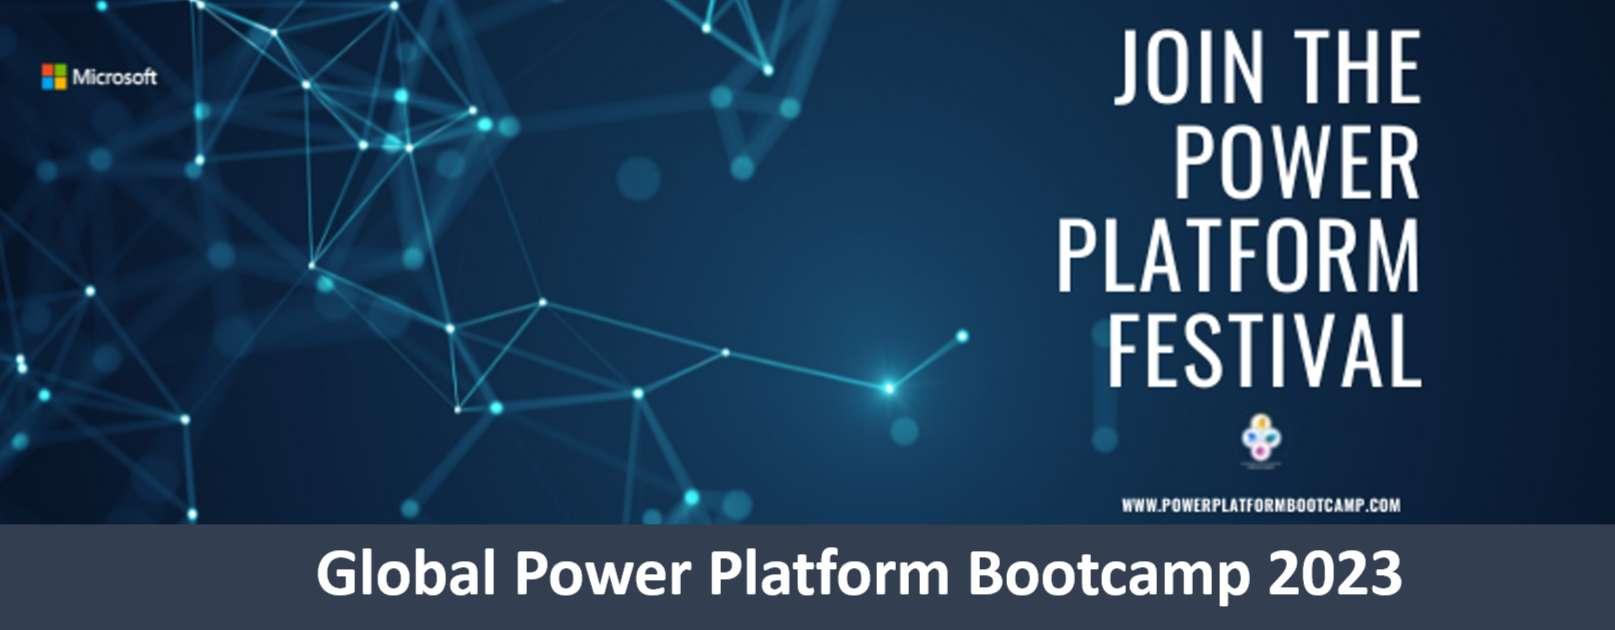 Global Power Platform Bootcamp 2023 - New York